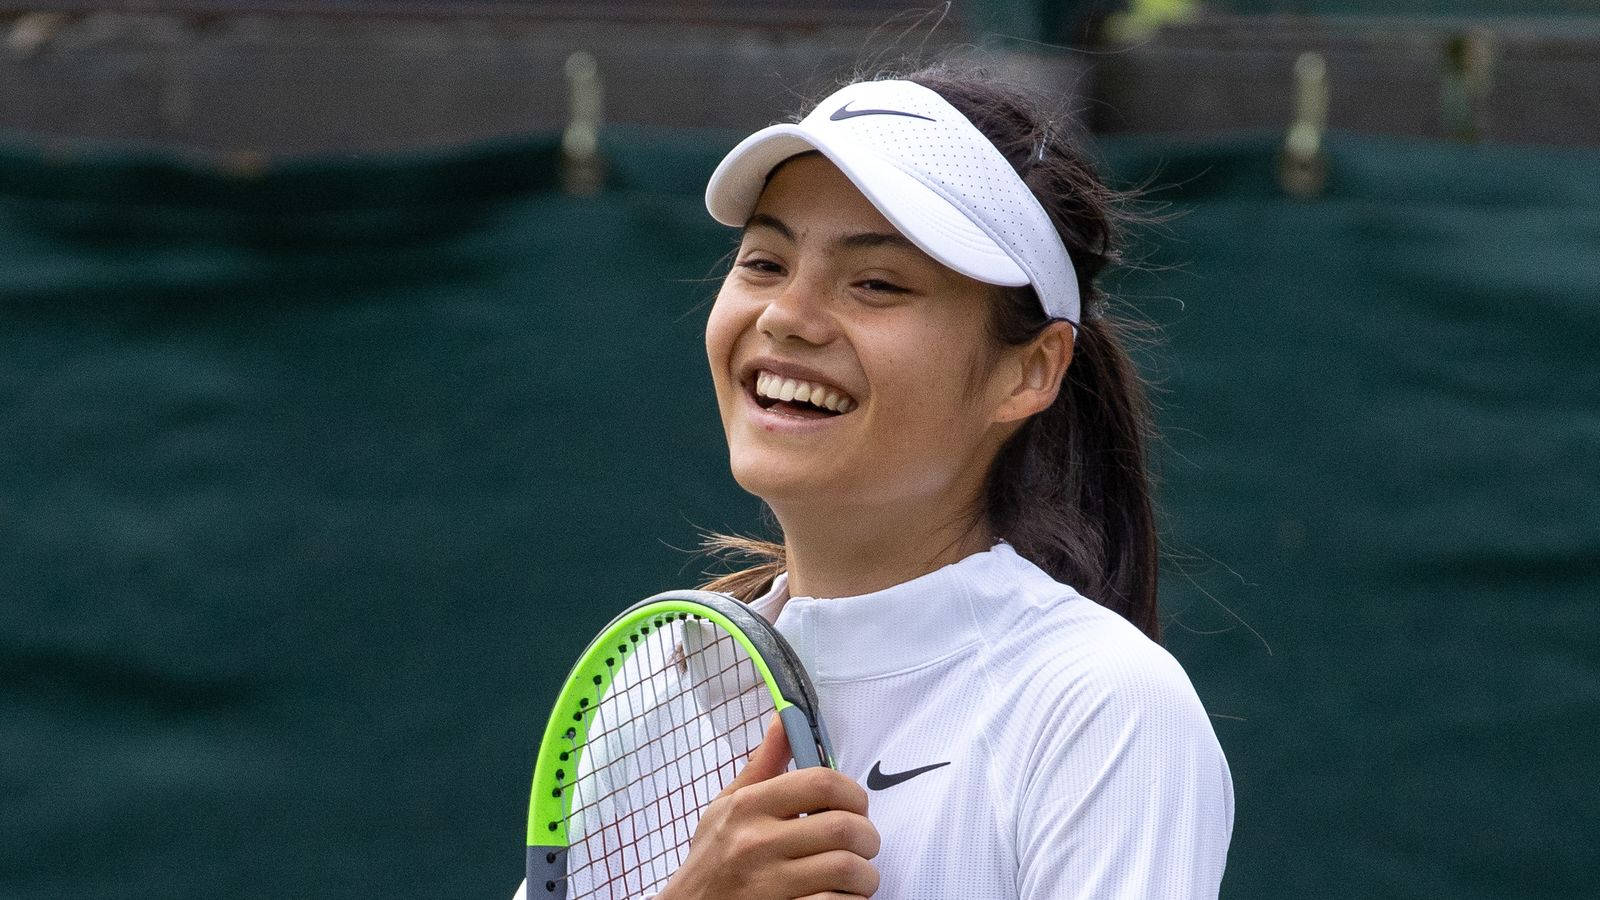 British Tennis Prodigy - Emma Raducanu’s Delightful Smile